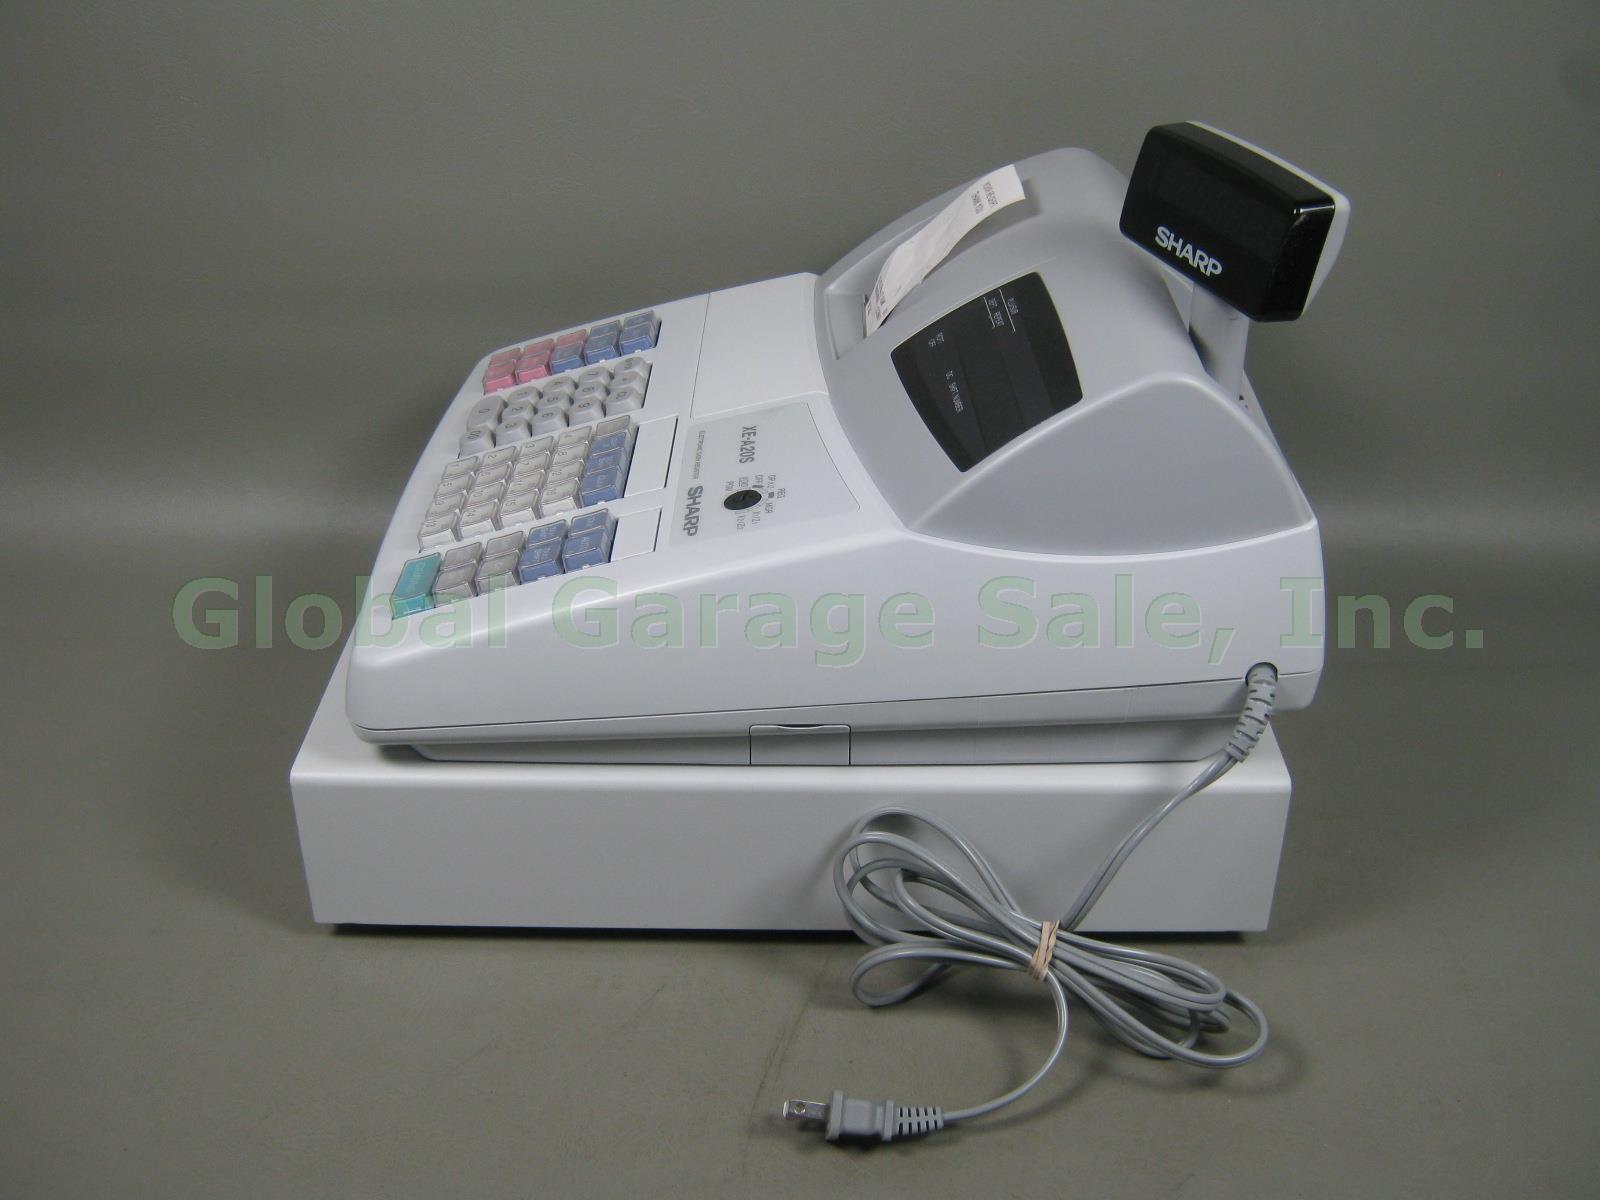 Sharp XE-A20S Electronic POS Cash Register Software CD USB Cable Manual + Bundle 4